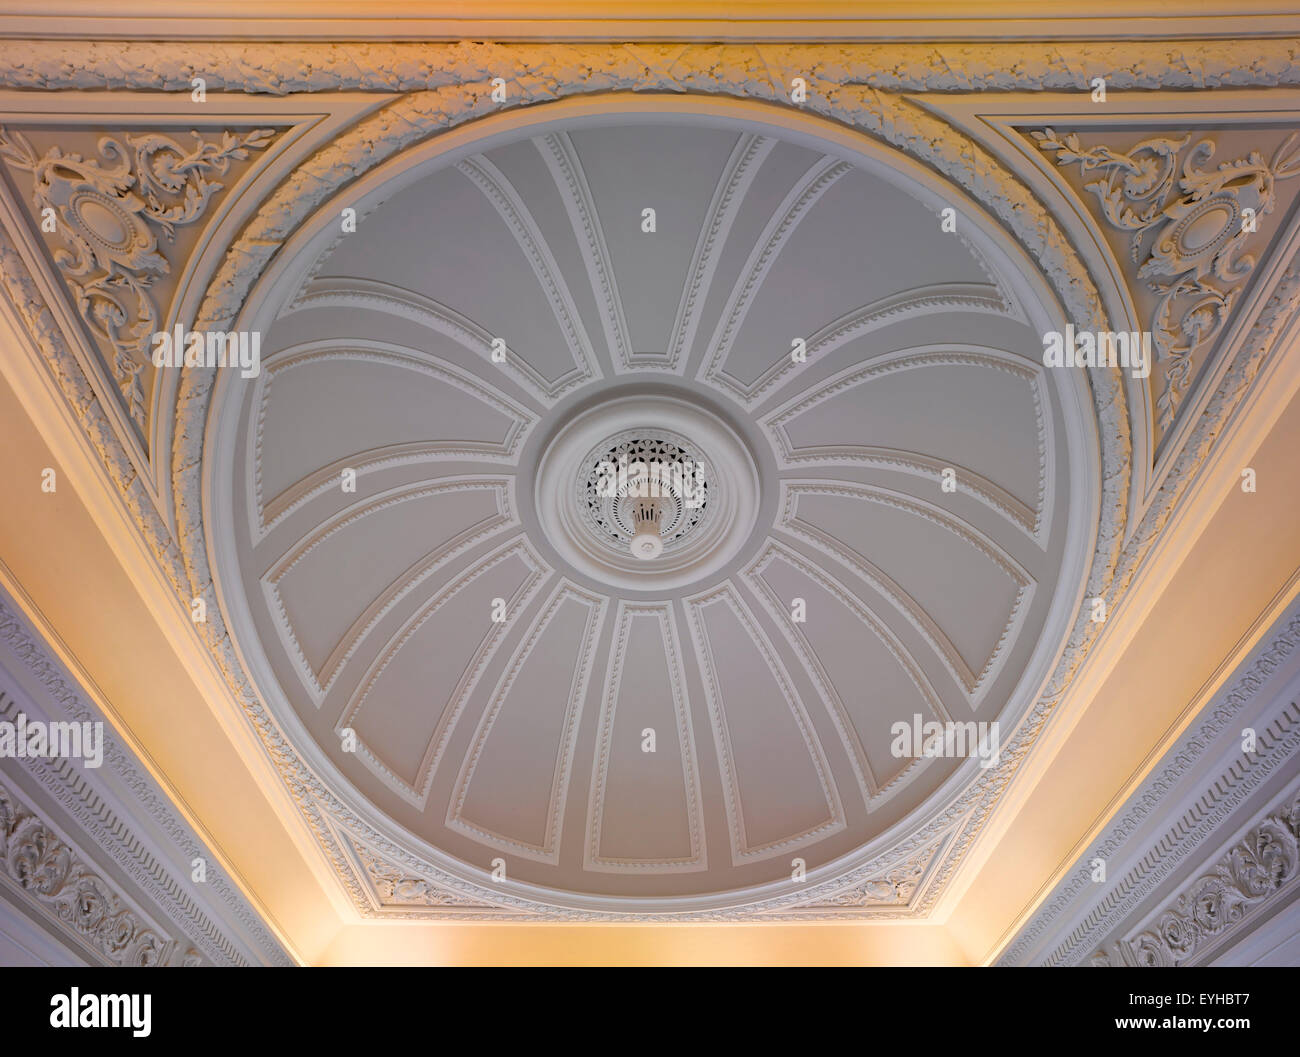 Ornate ceiling. Commerical stock portfolio (continued), na, United Kingdom. Architect: na, 2015. Stock Photo